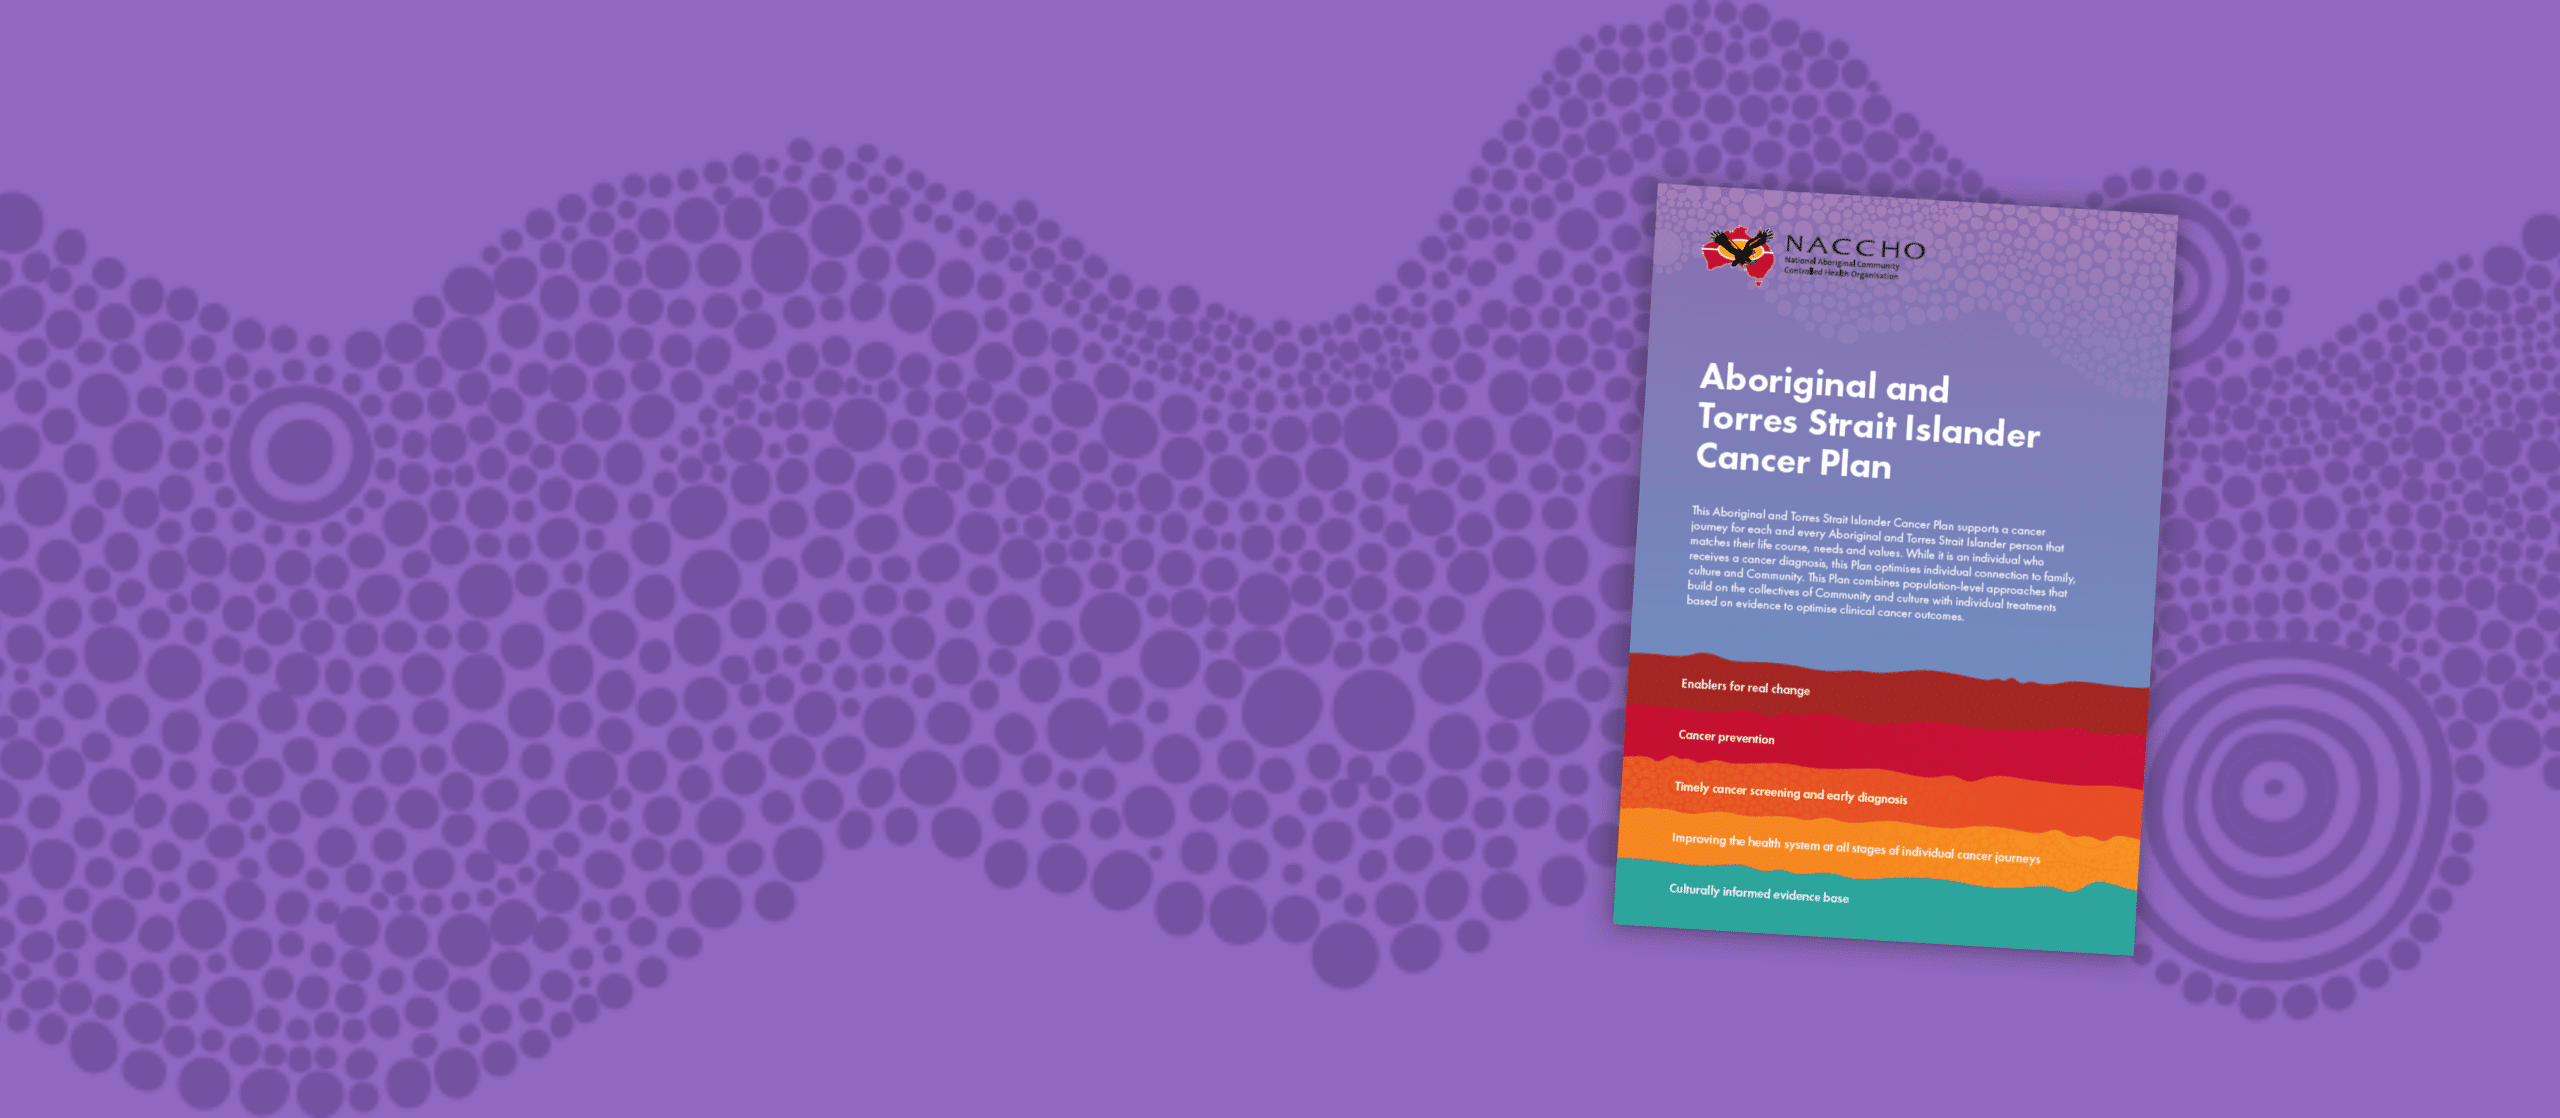 Aboriginal and Torres Strait Islander Cancer Plan - Website Hero Image